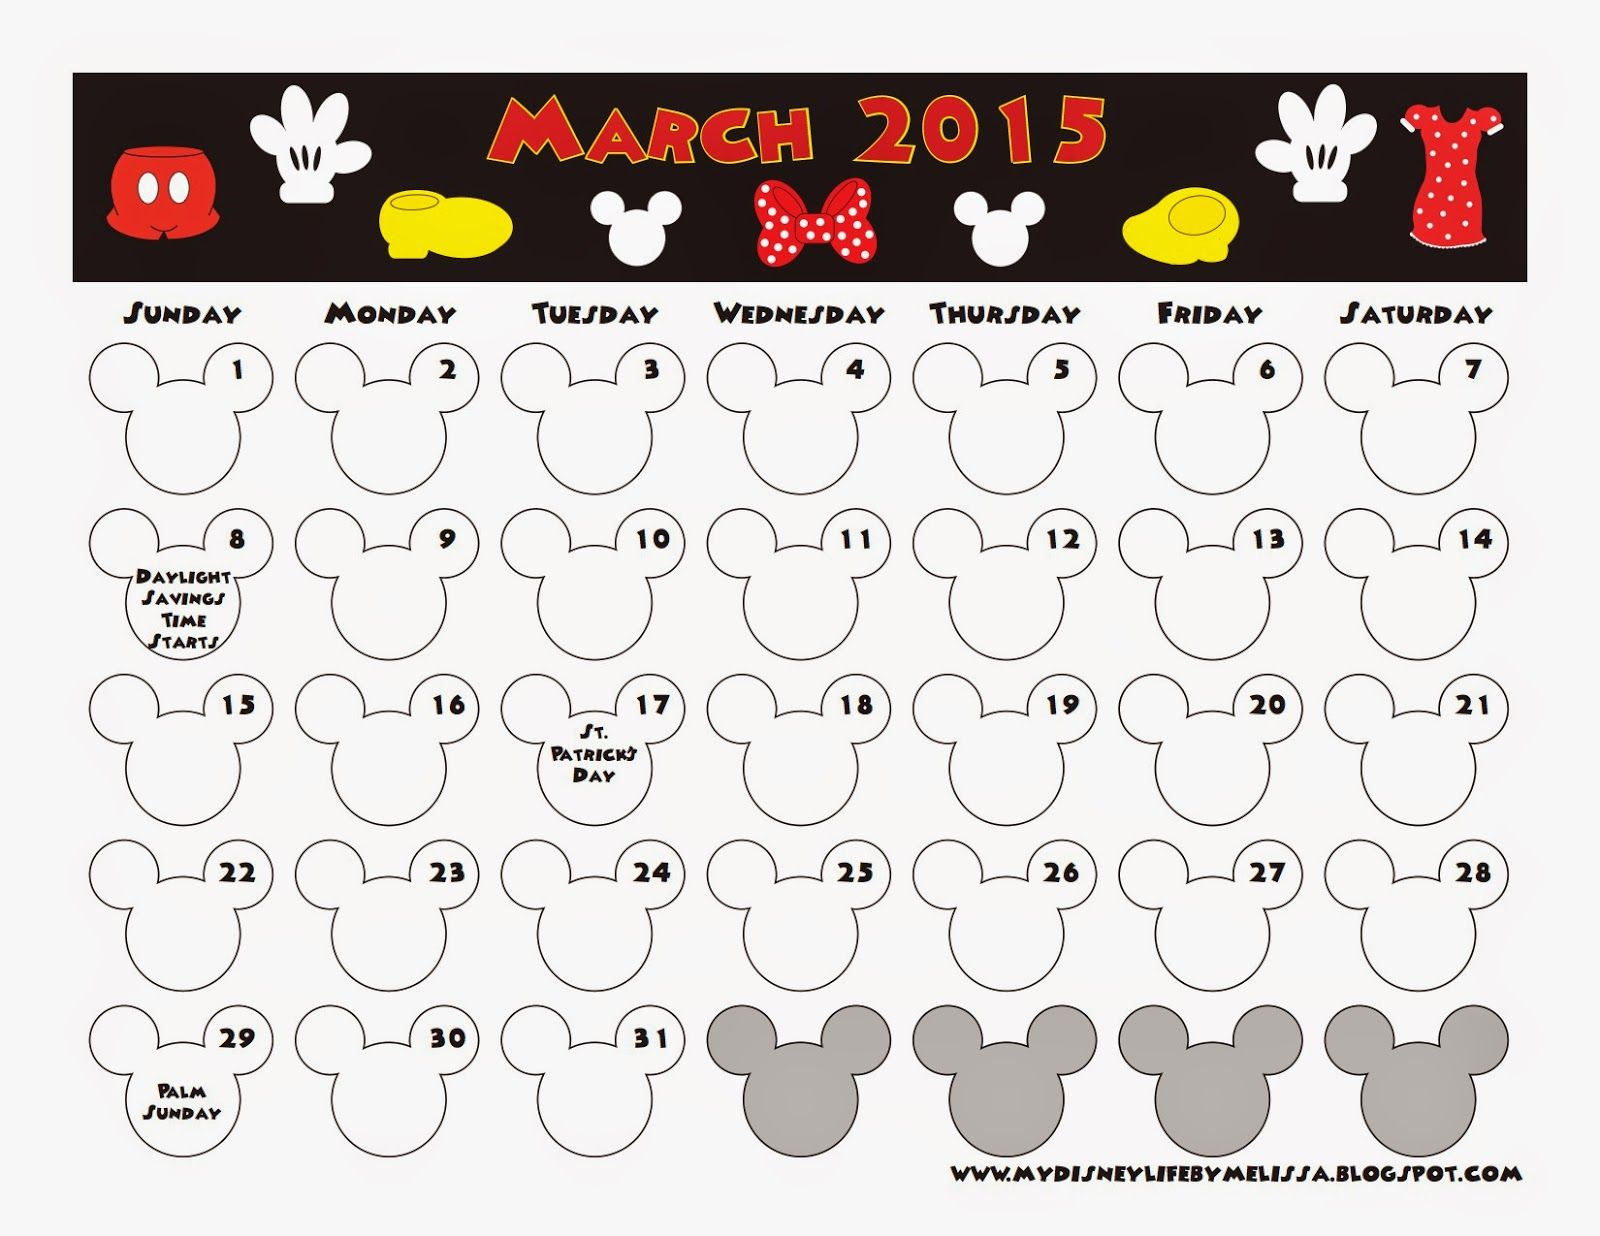 My Disney Life: March 2015 Calendar. Free Printable Mickey